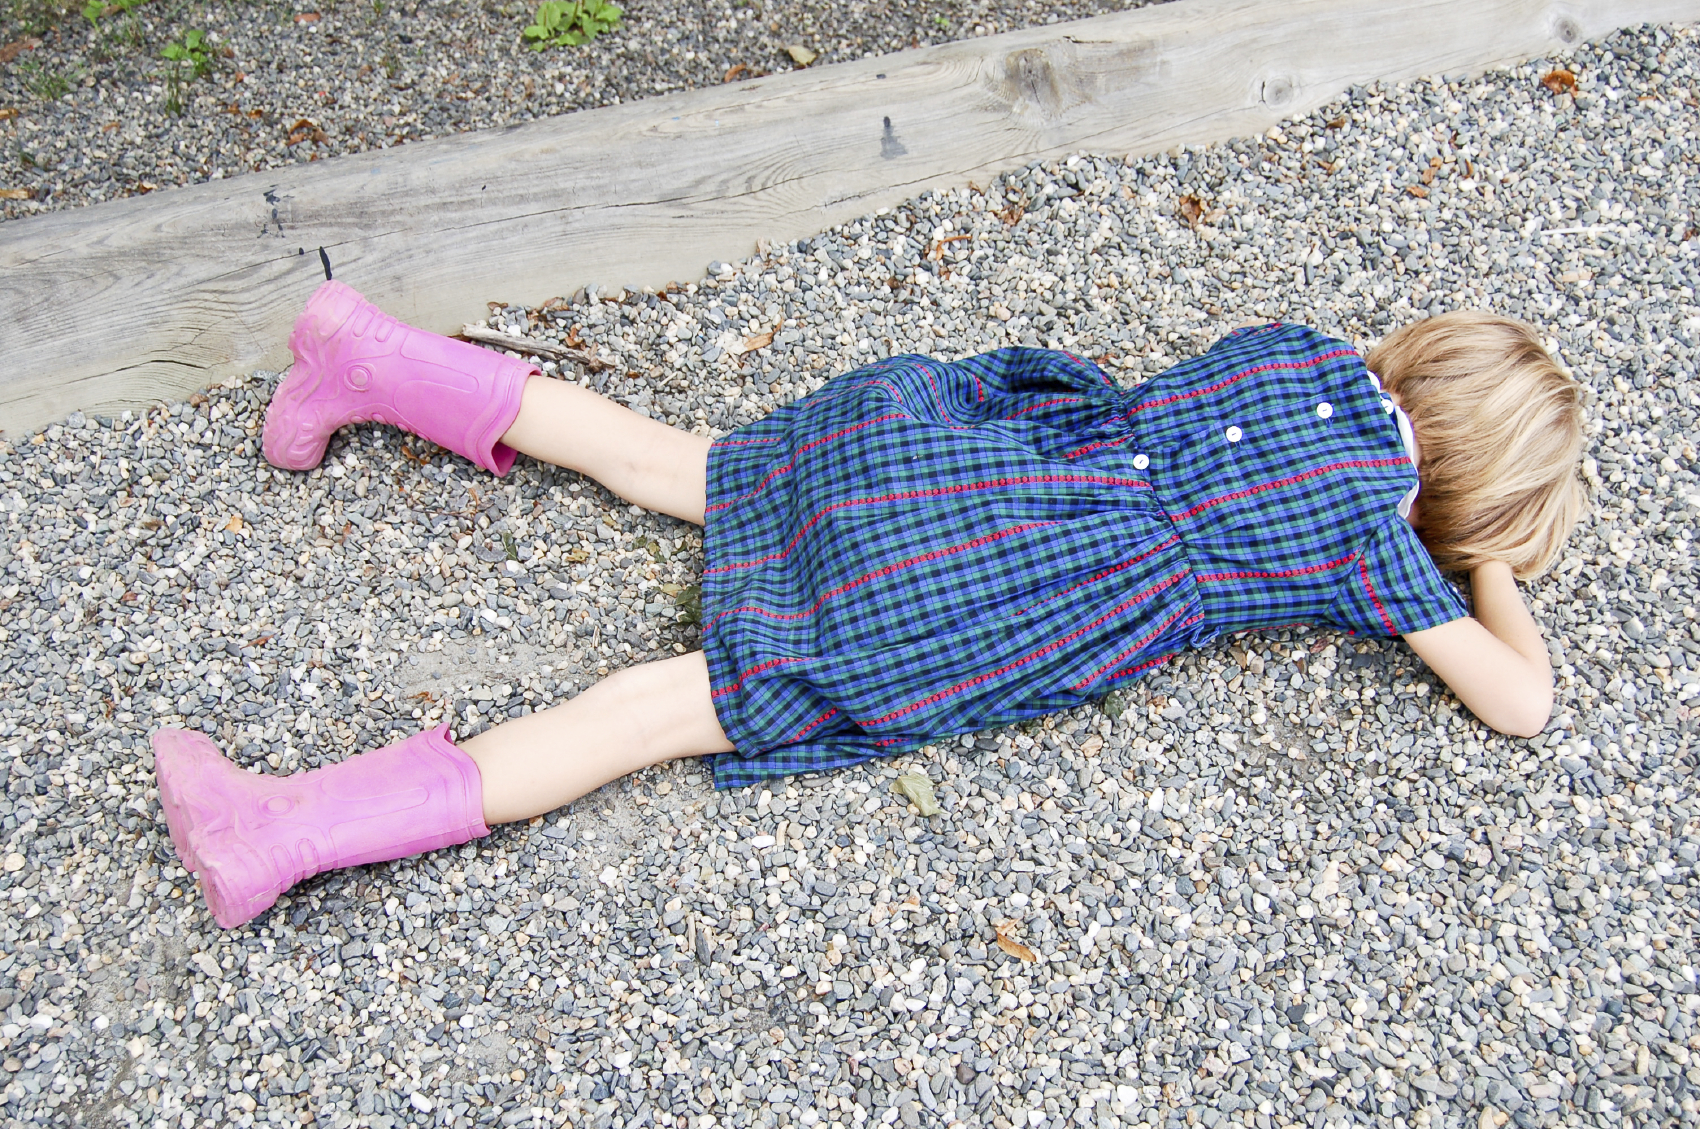 A sad child lies on the gravel of a school playground.